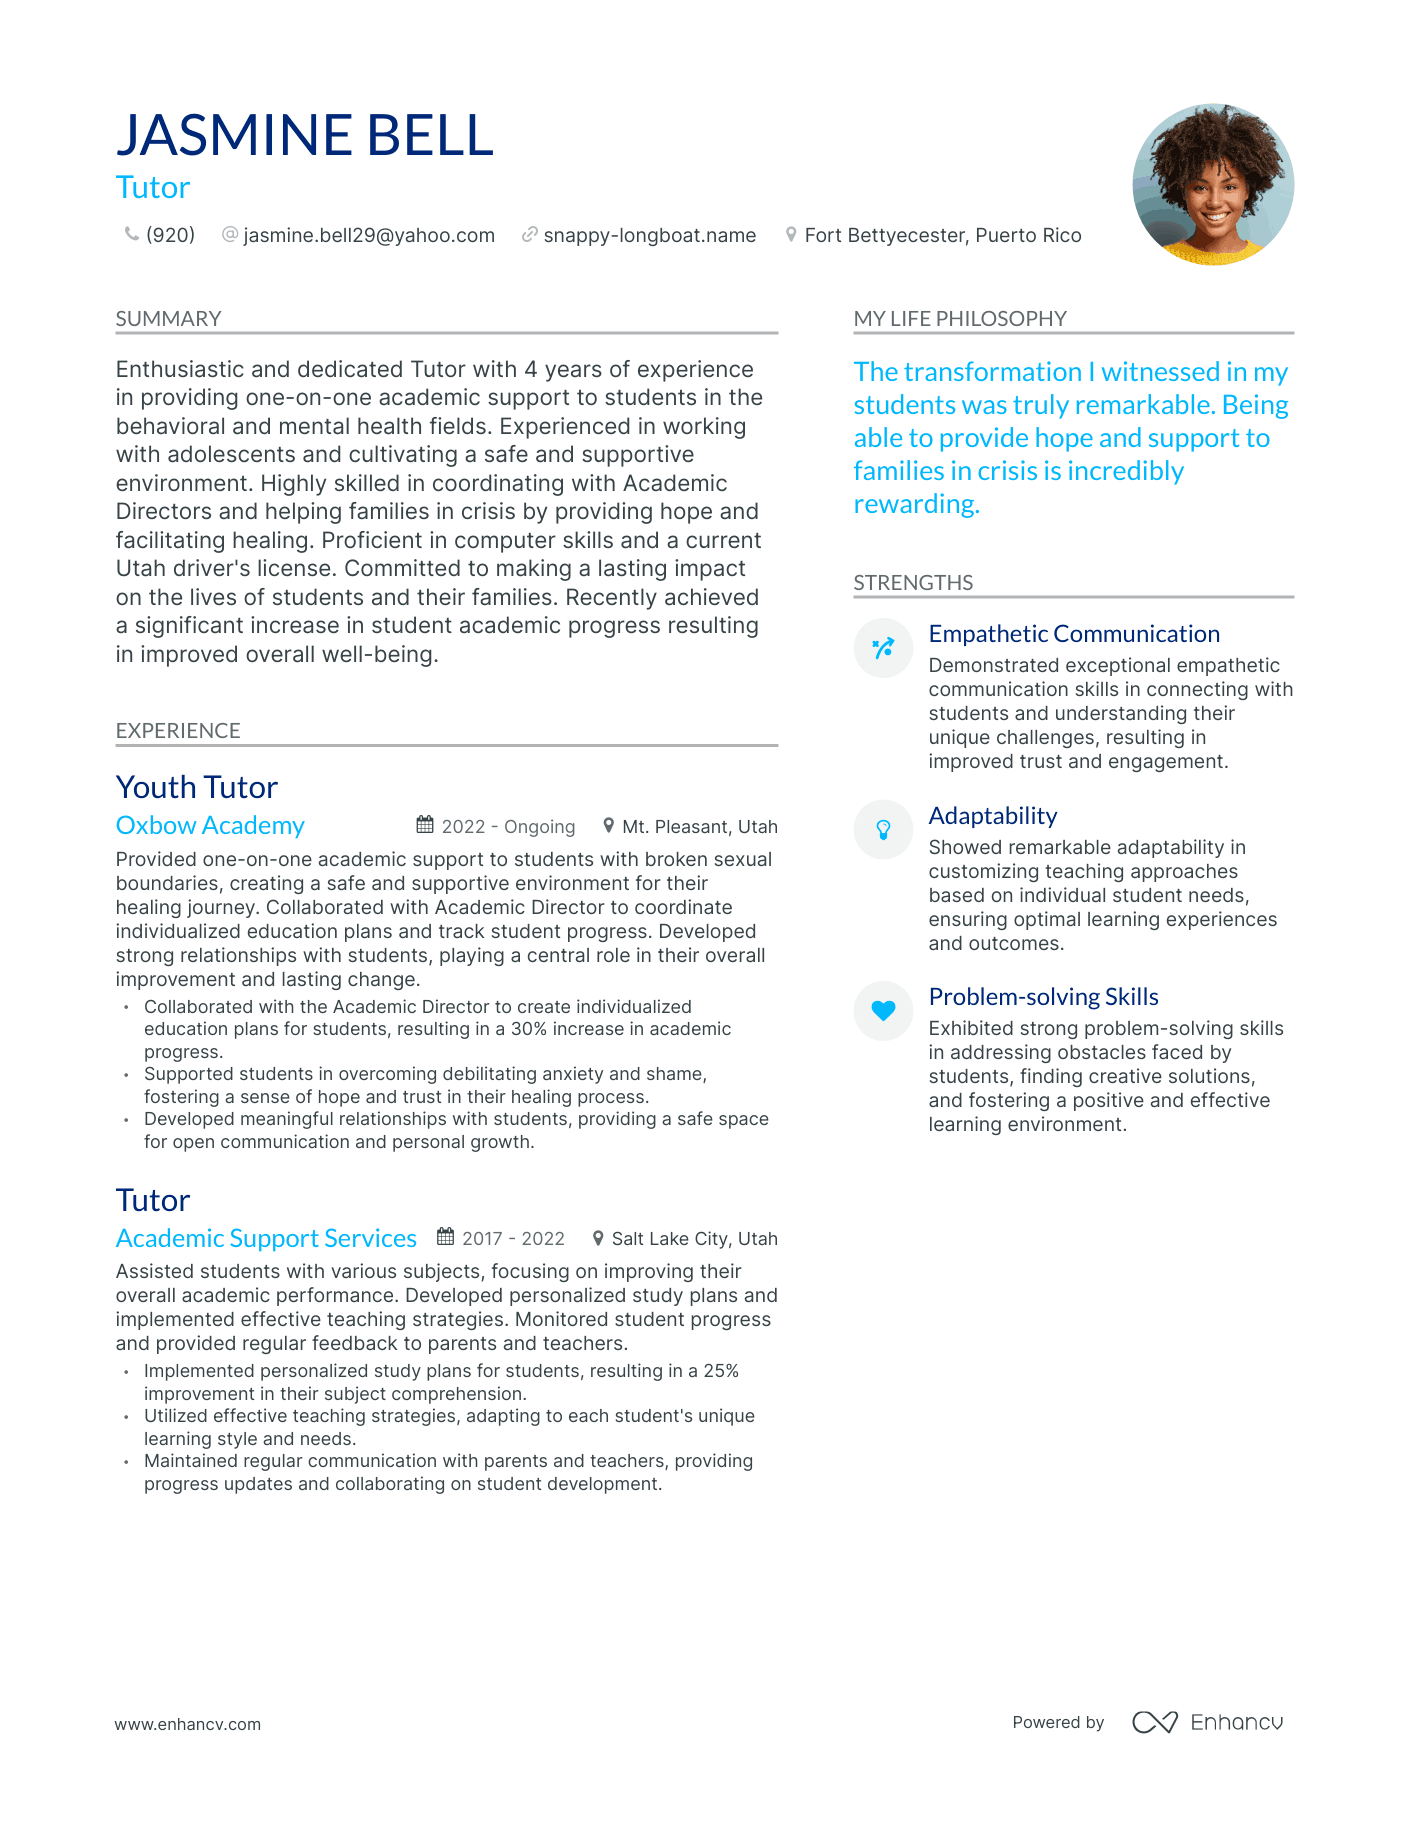 Tutor resume example